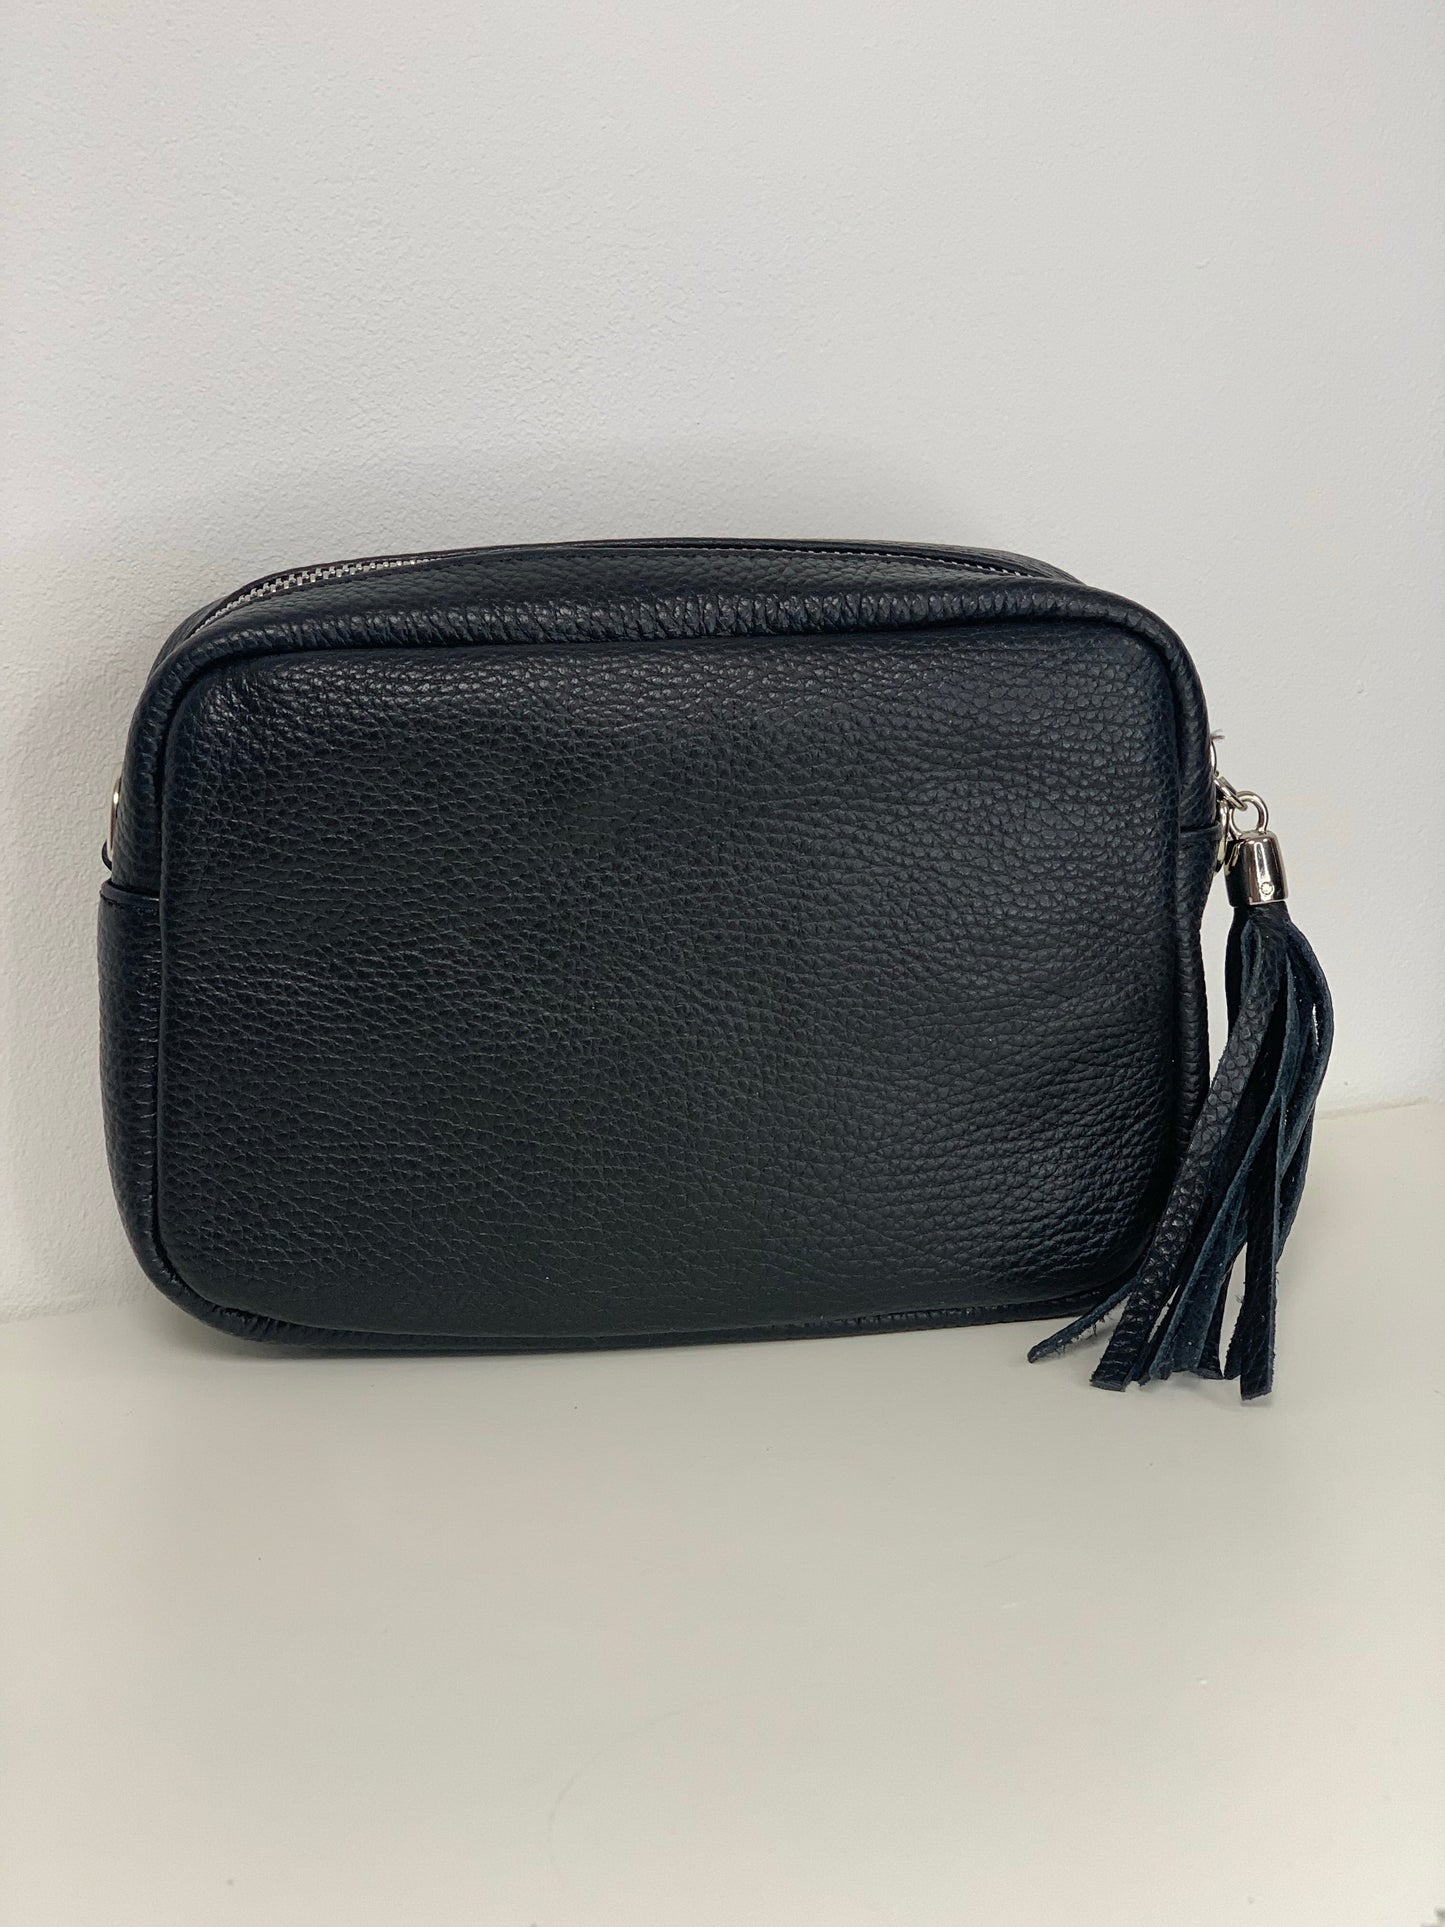 Black Camera Bag - Real Leather